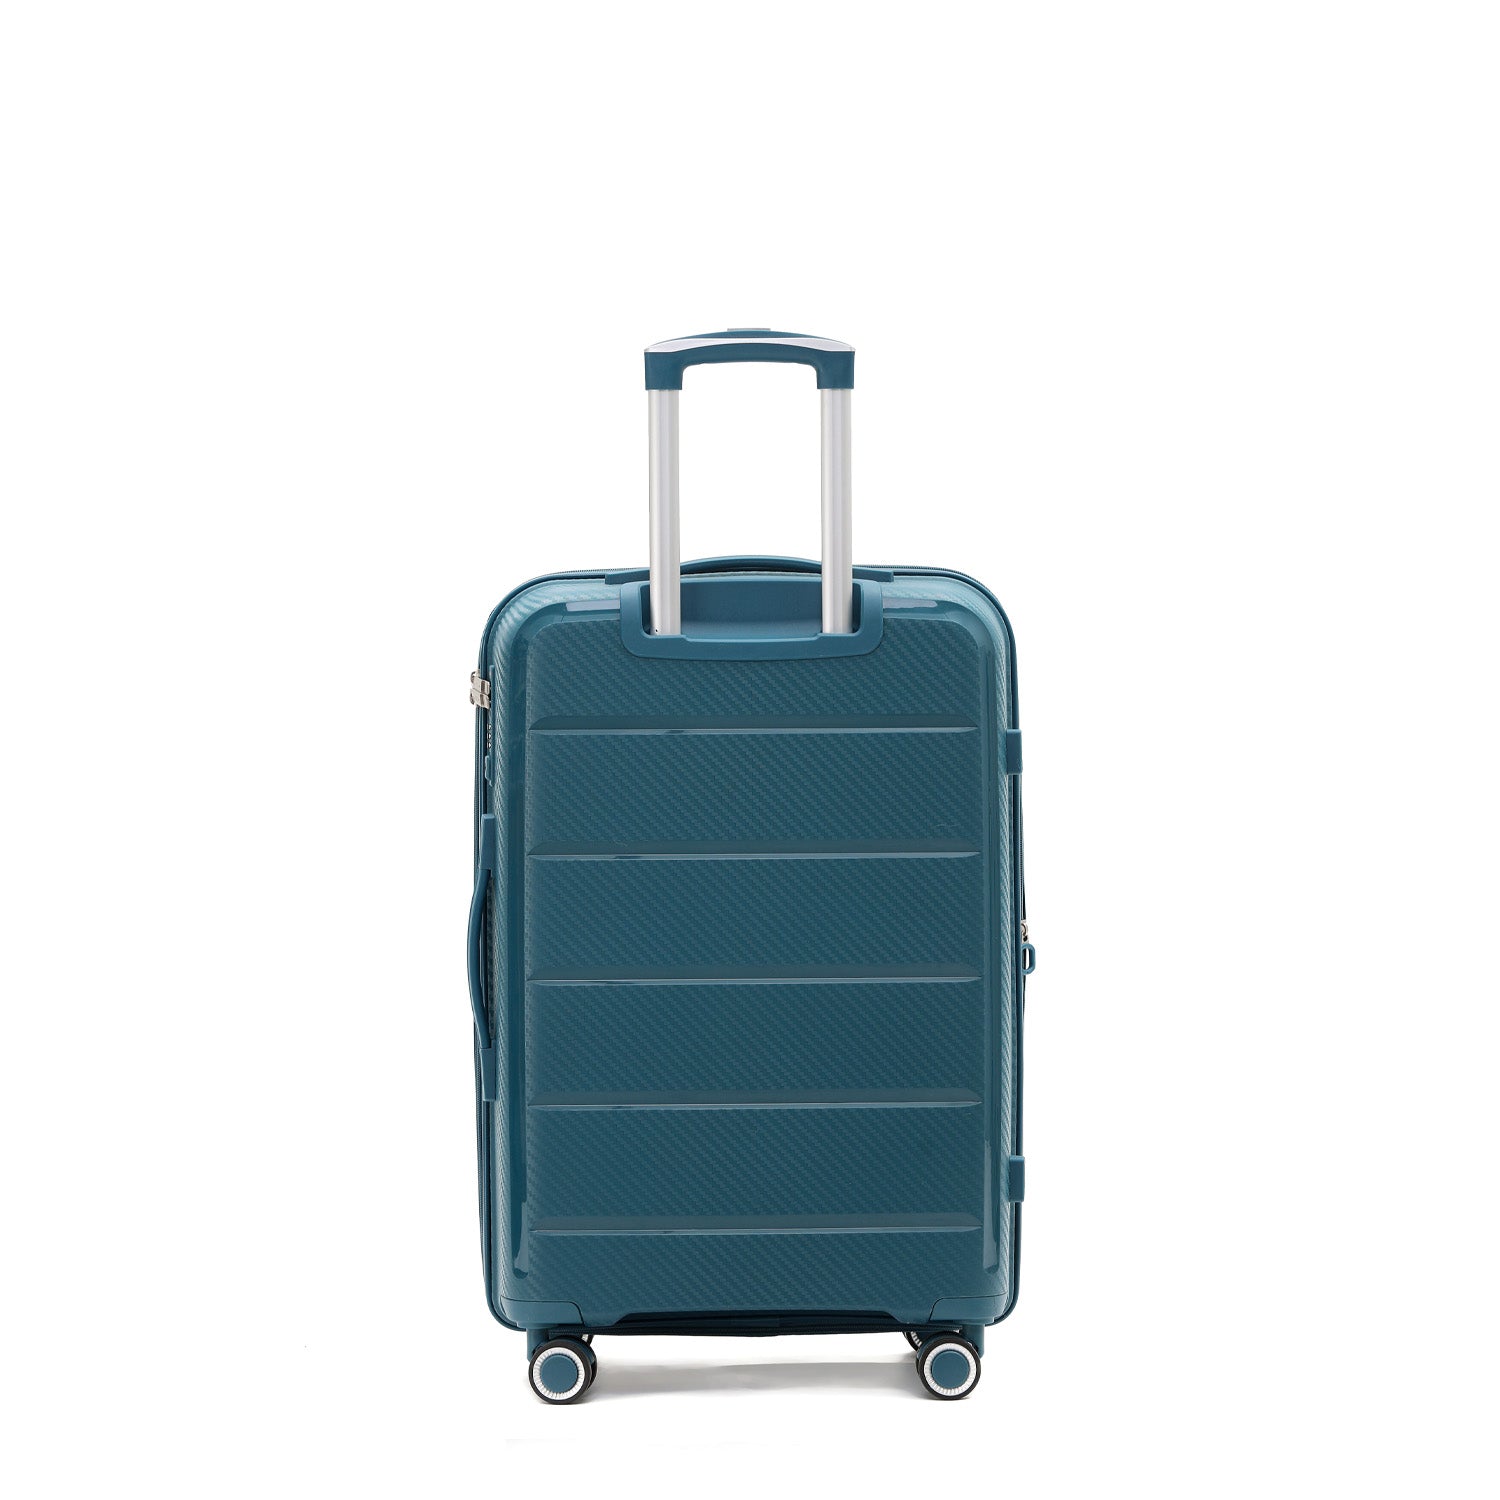 Paklite - PA7350 Medium 65cm spinner suitcase - Blue-2